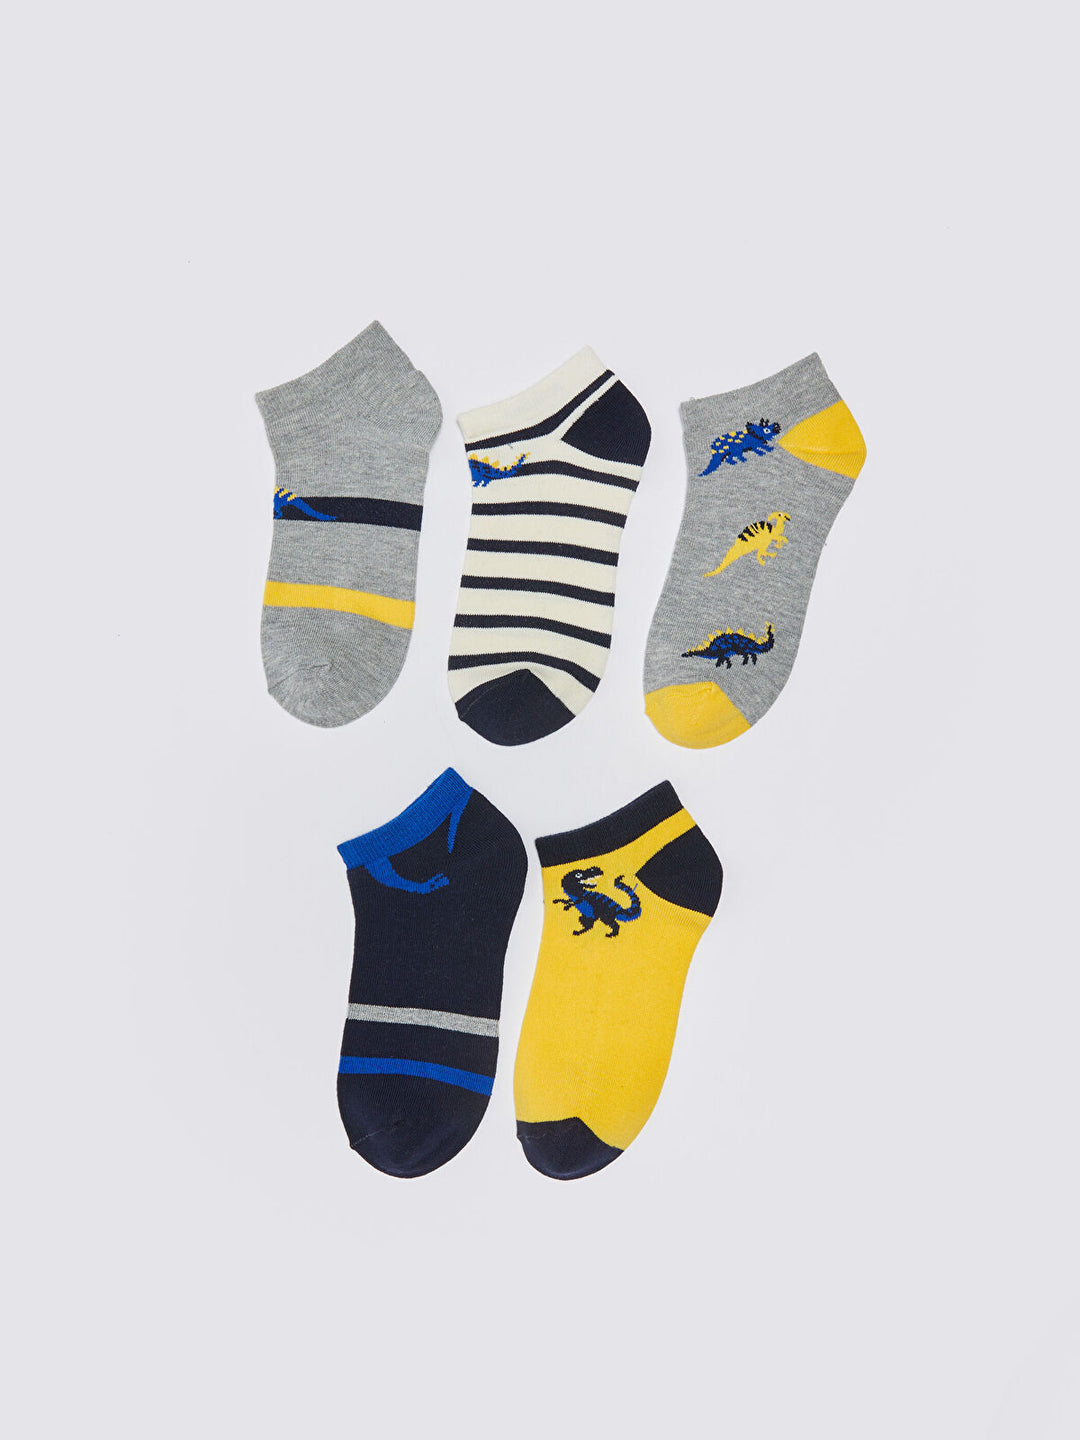 Multicolored Patterned Boys Booties Socks 5 Pack